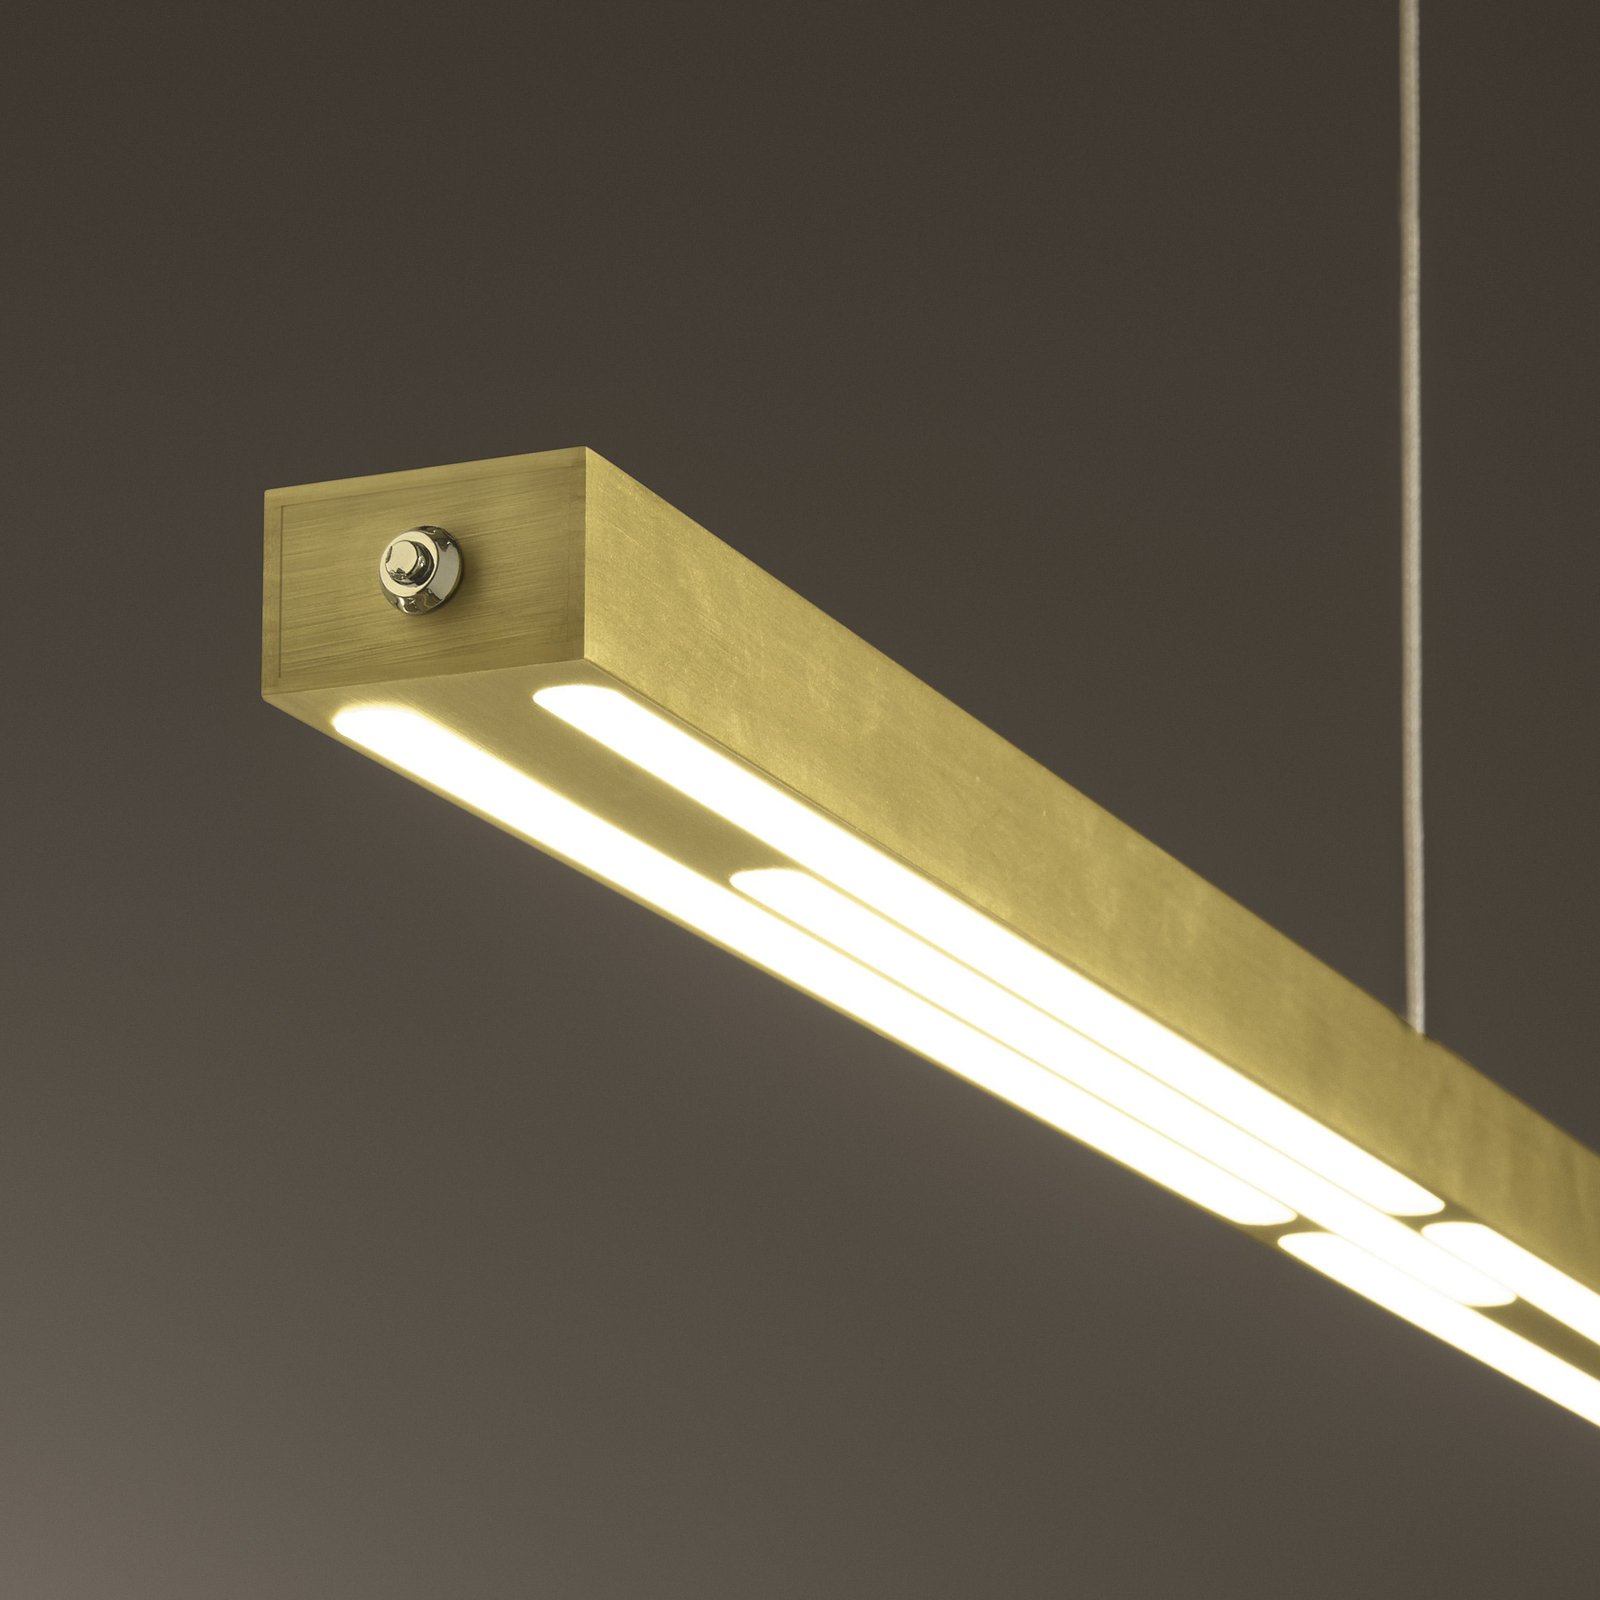 Ling LED hanglamp, messing, uplight en downlight, dimbaar